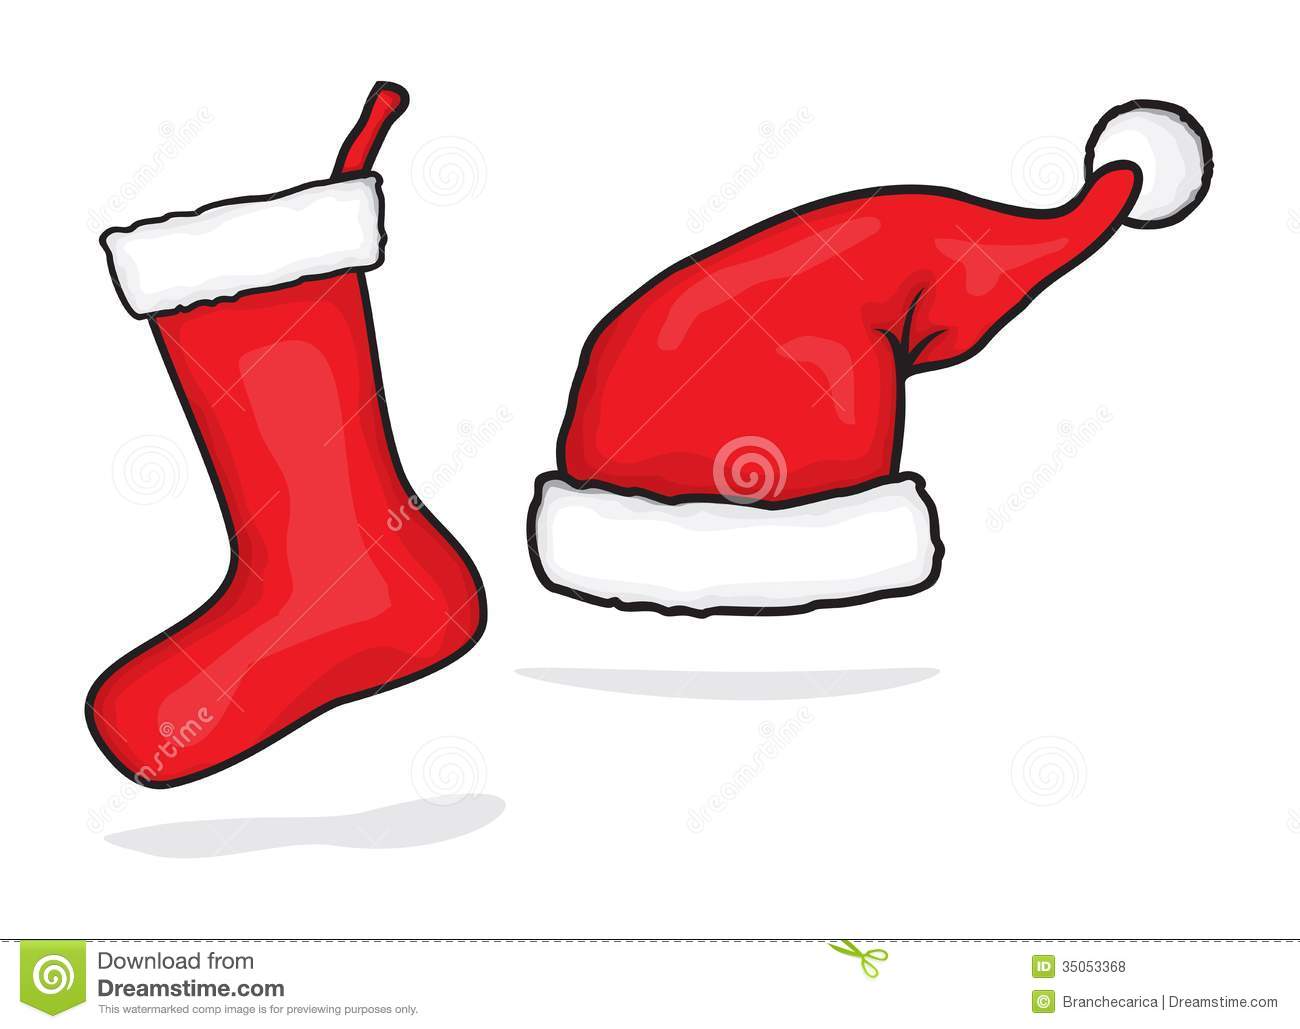 Stockings and Santa Christmas Hats Images